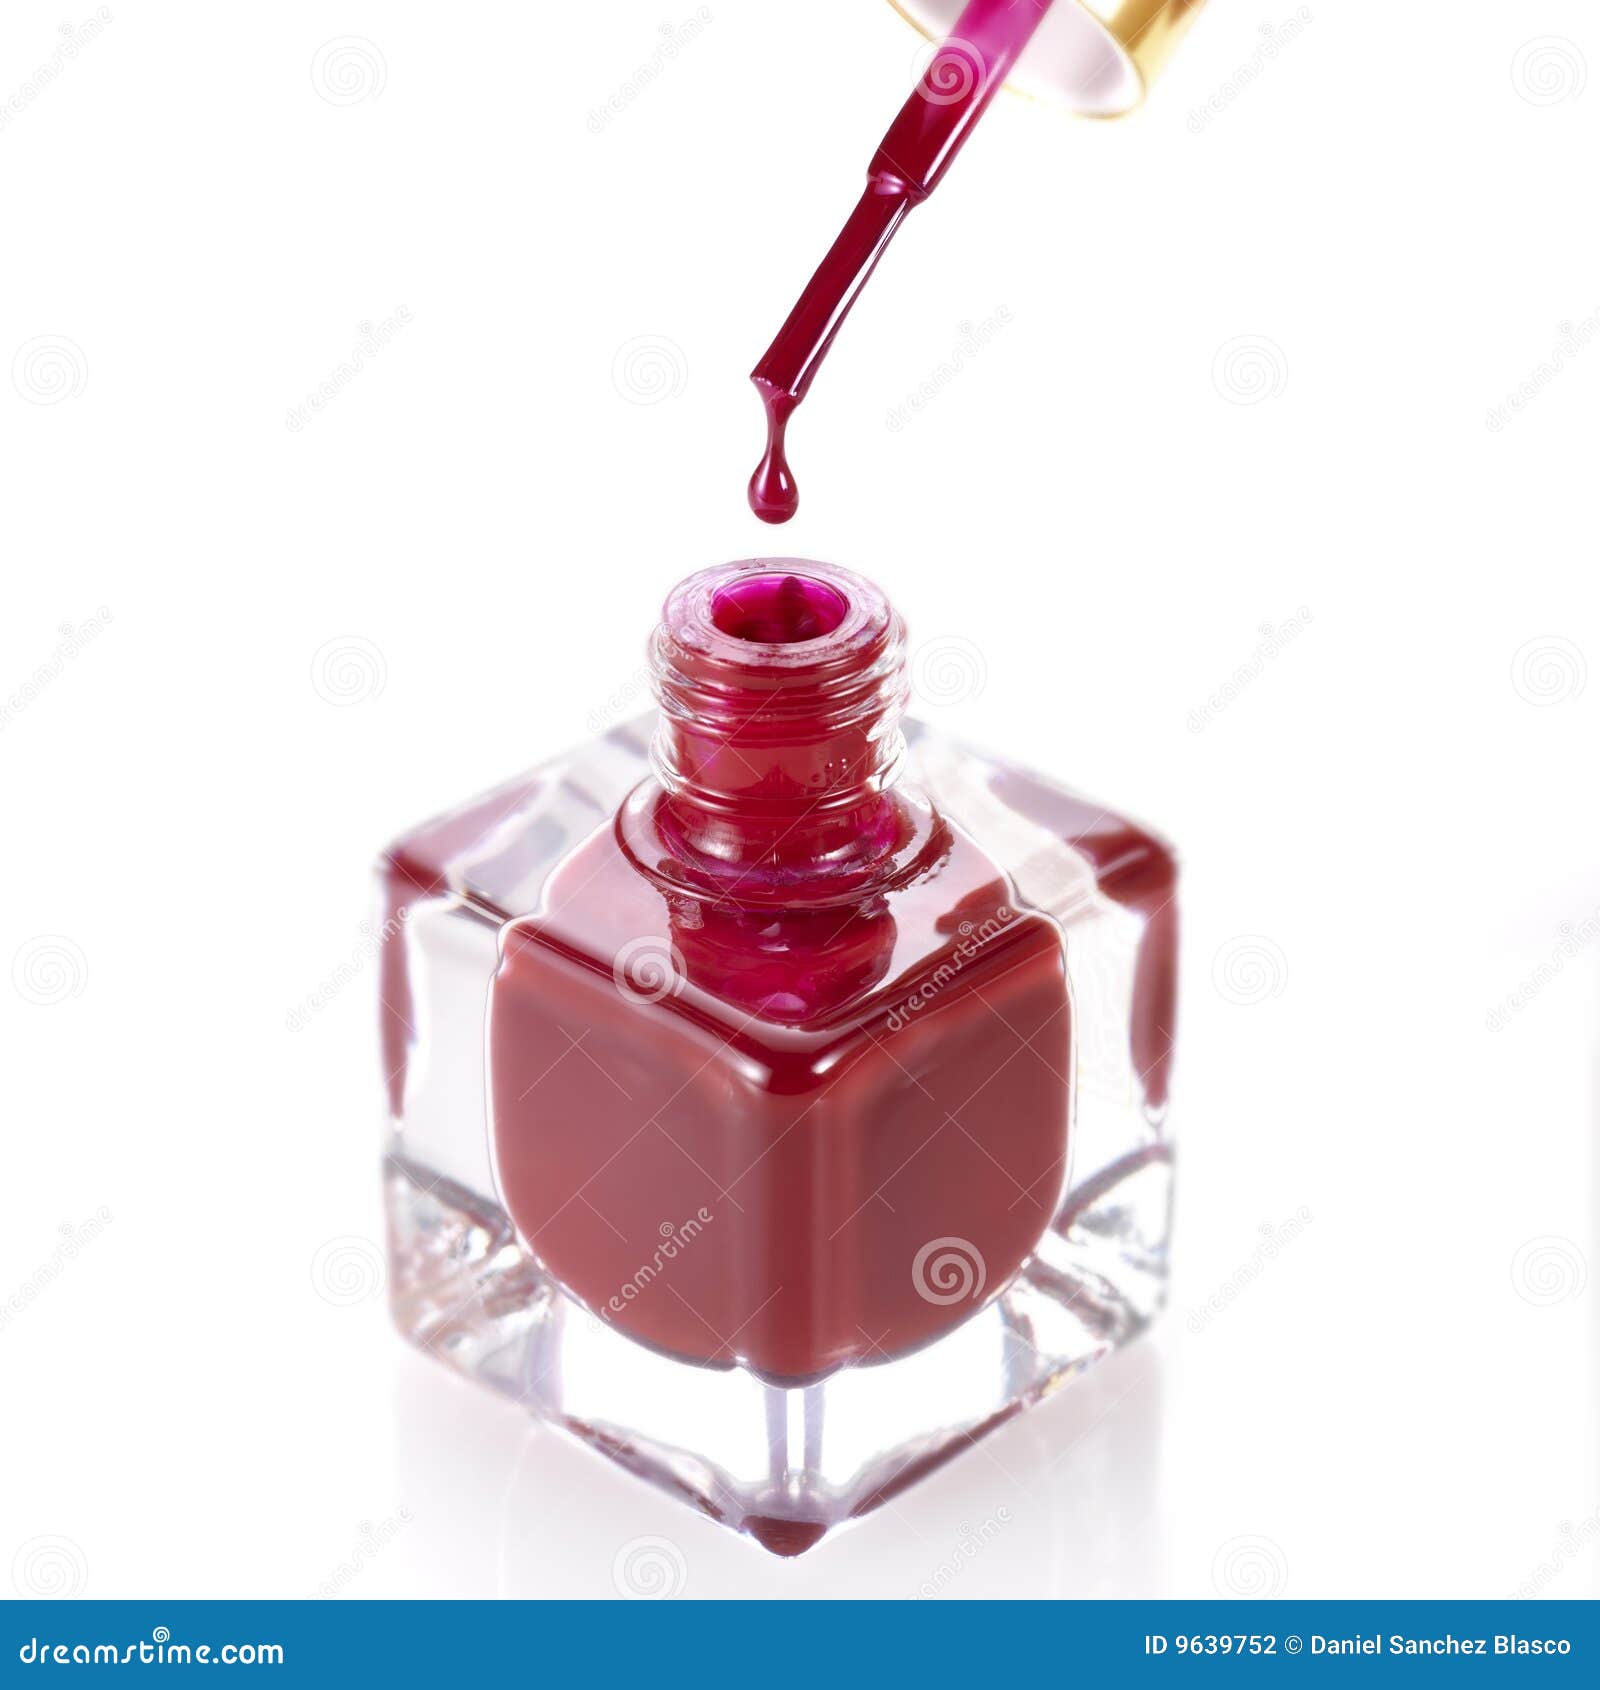 Nail polish dripping stock photo. Image of glass, life - 9639752